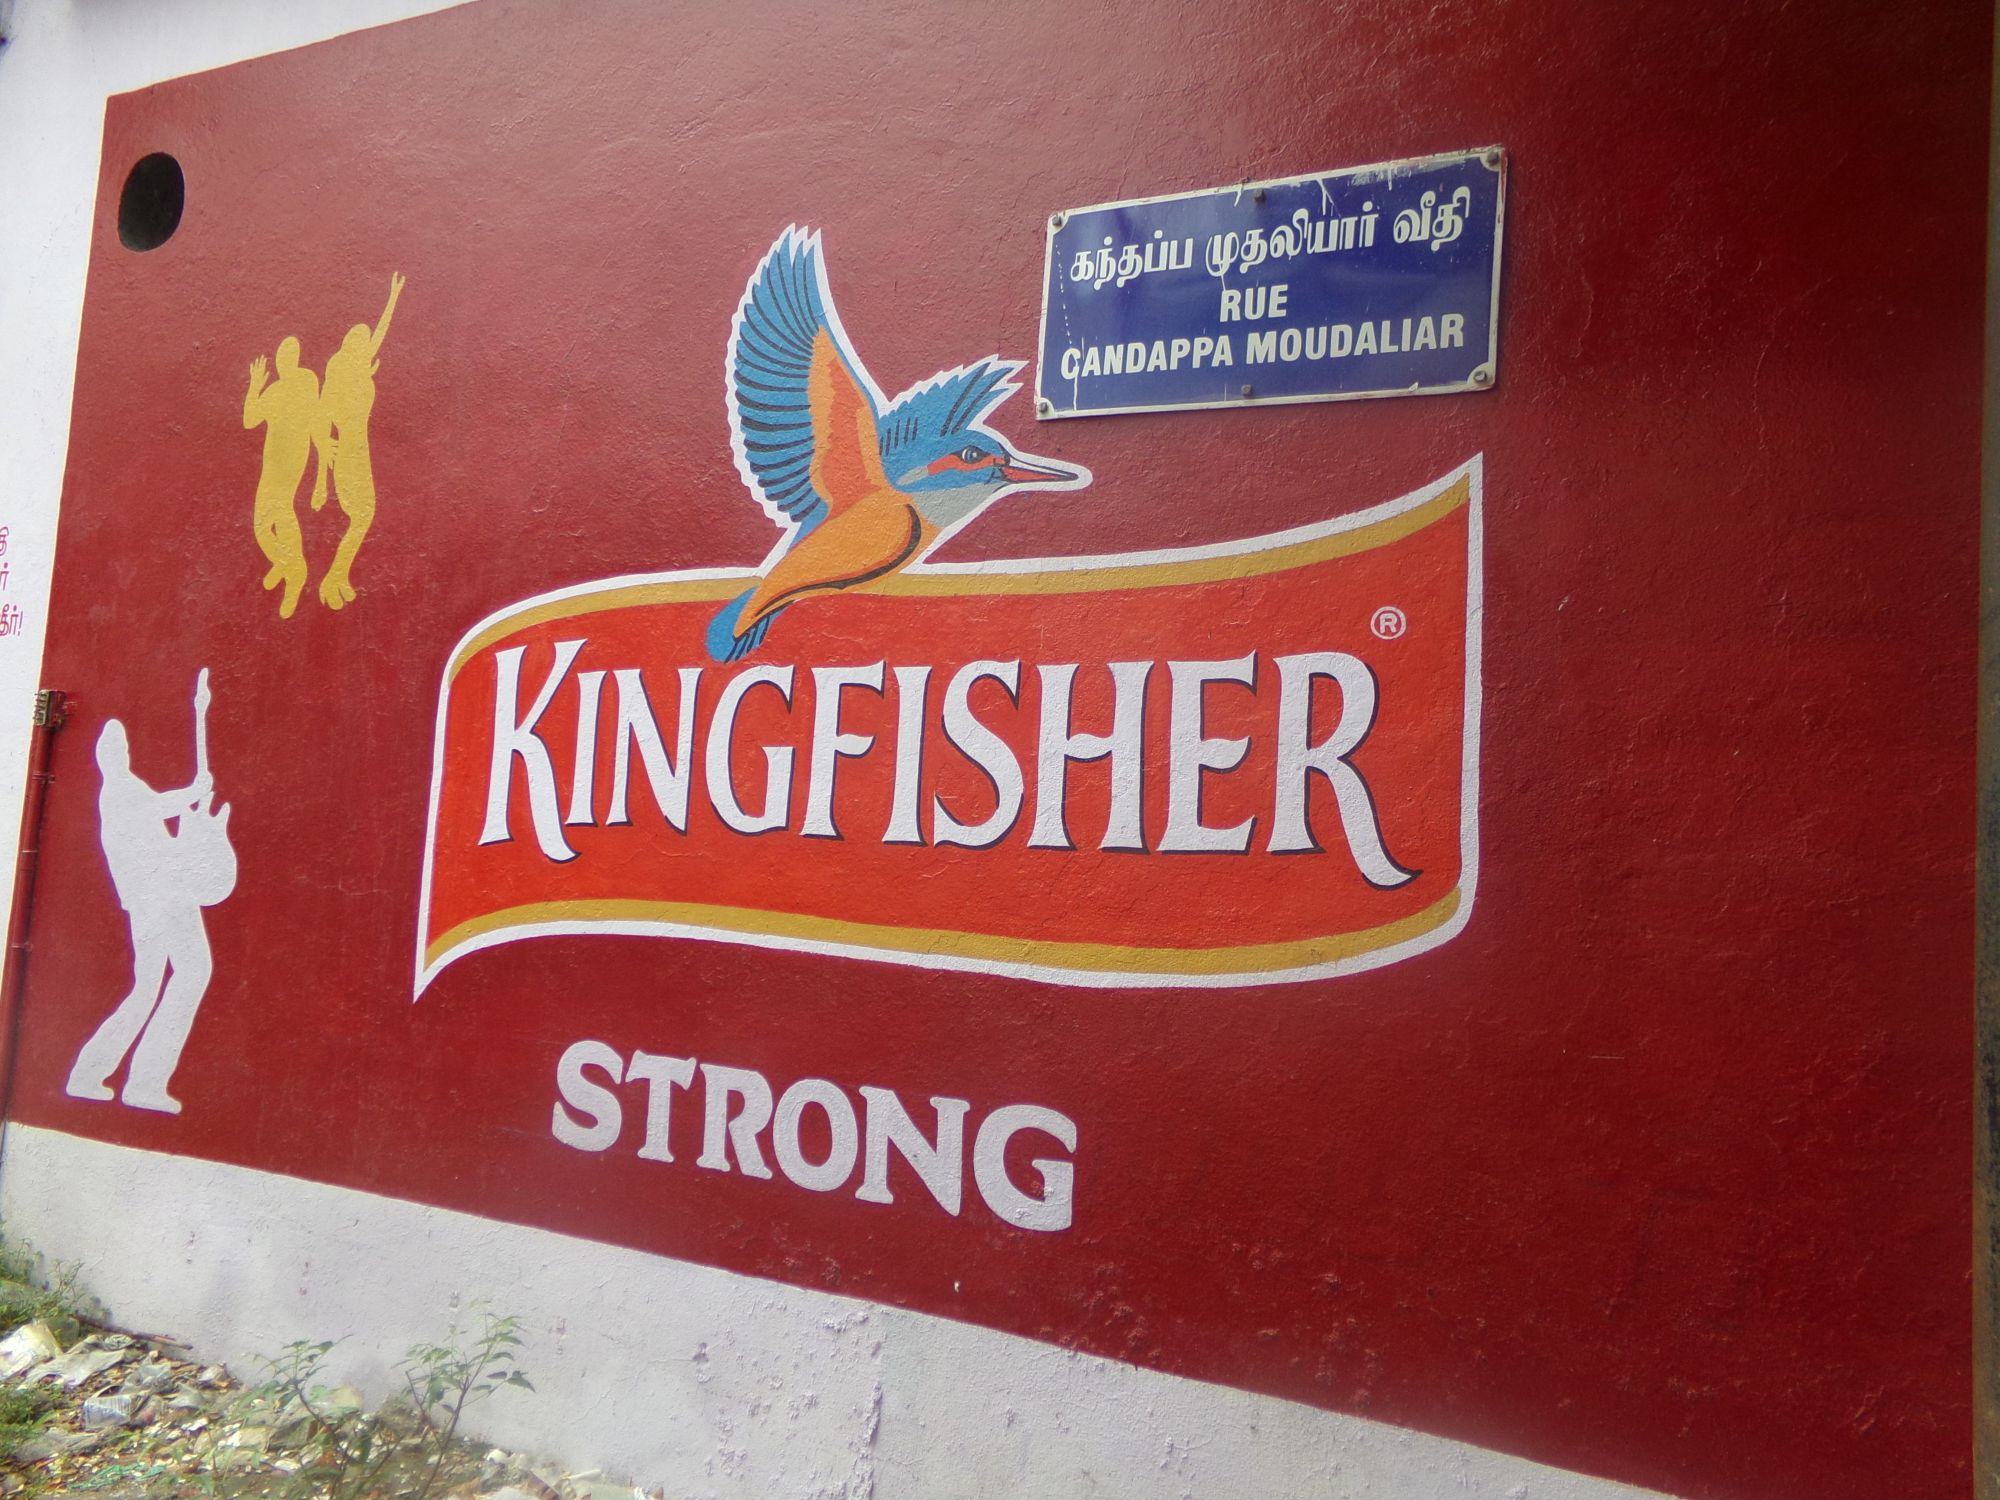 kingfisher biere indienne